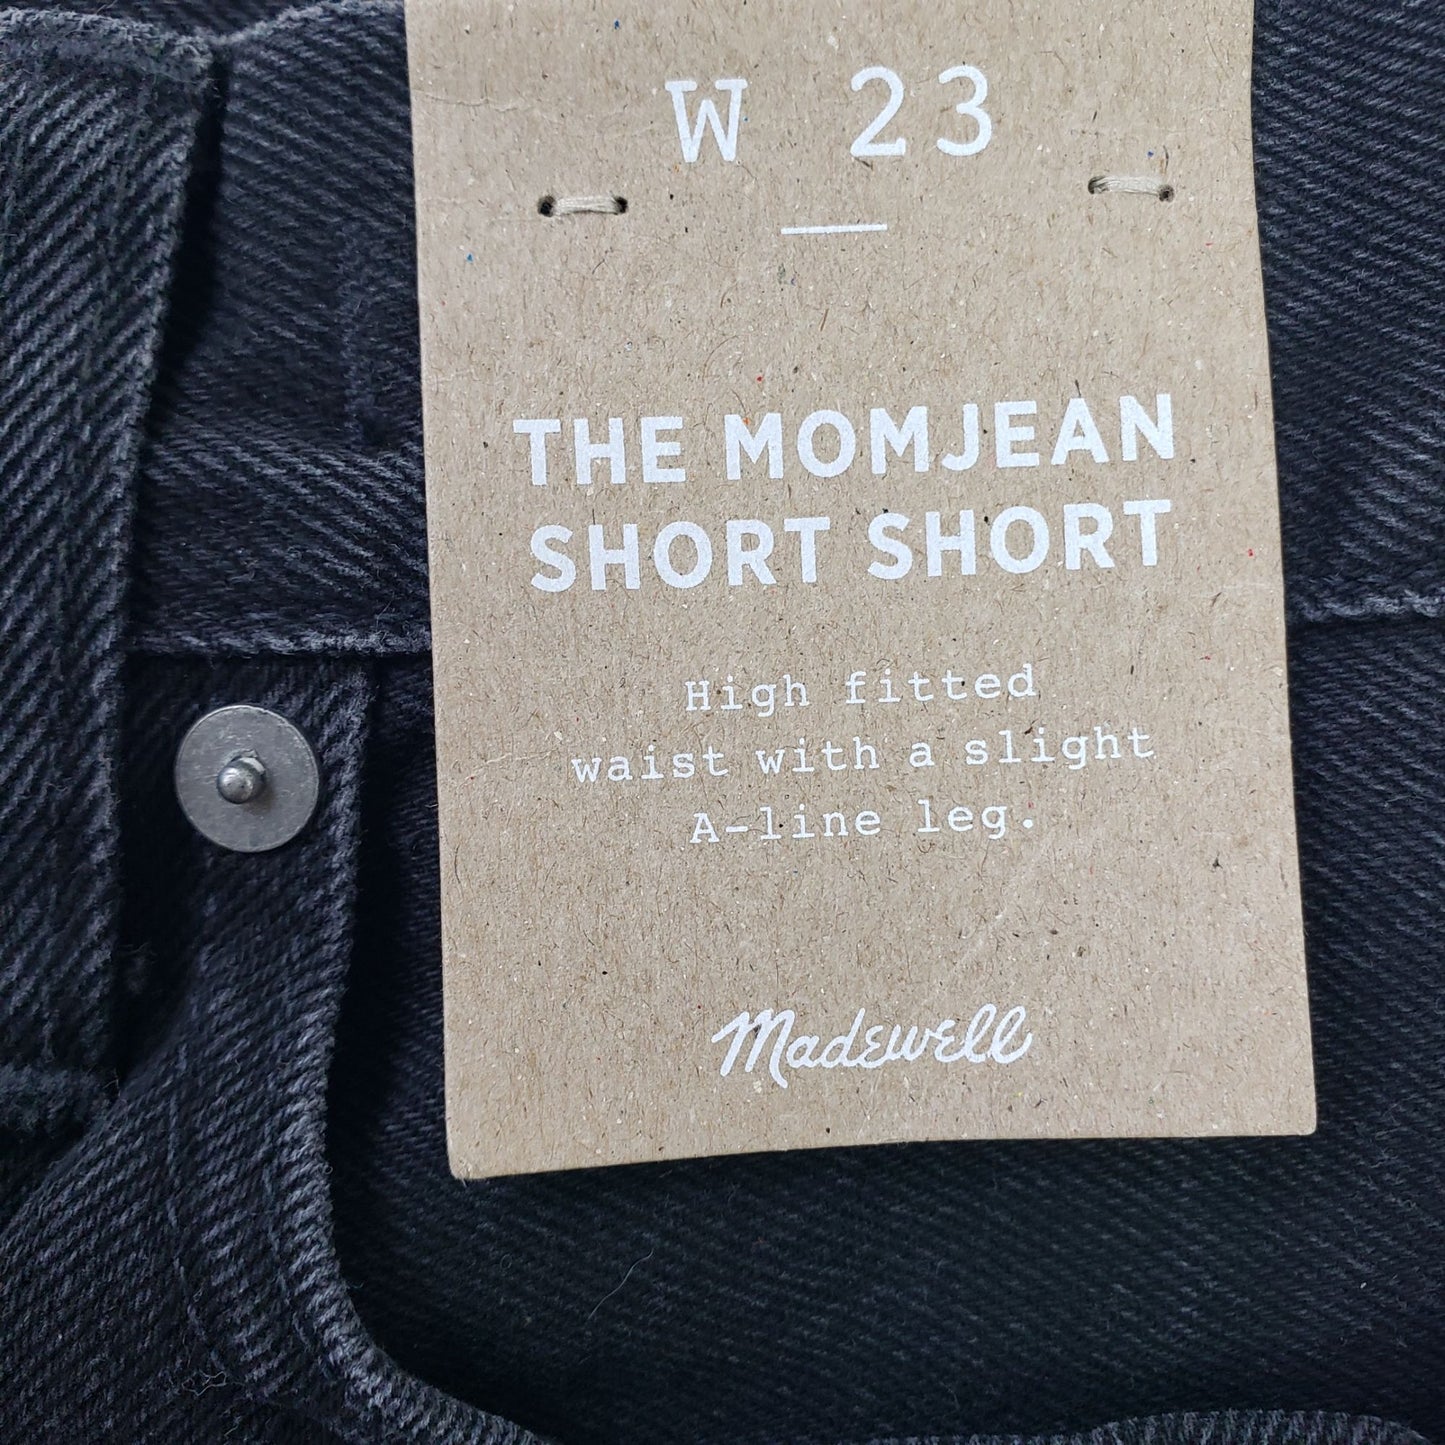 NWT Madewell 2.5" Momjean Short Shorts Size 23